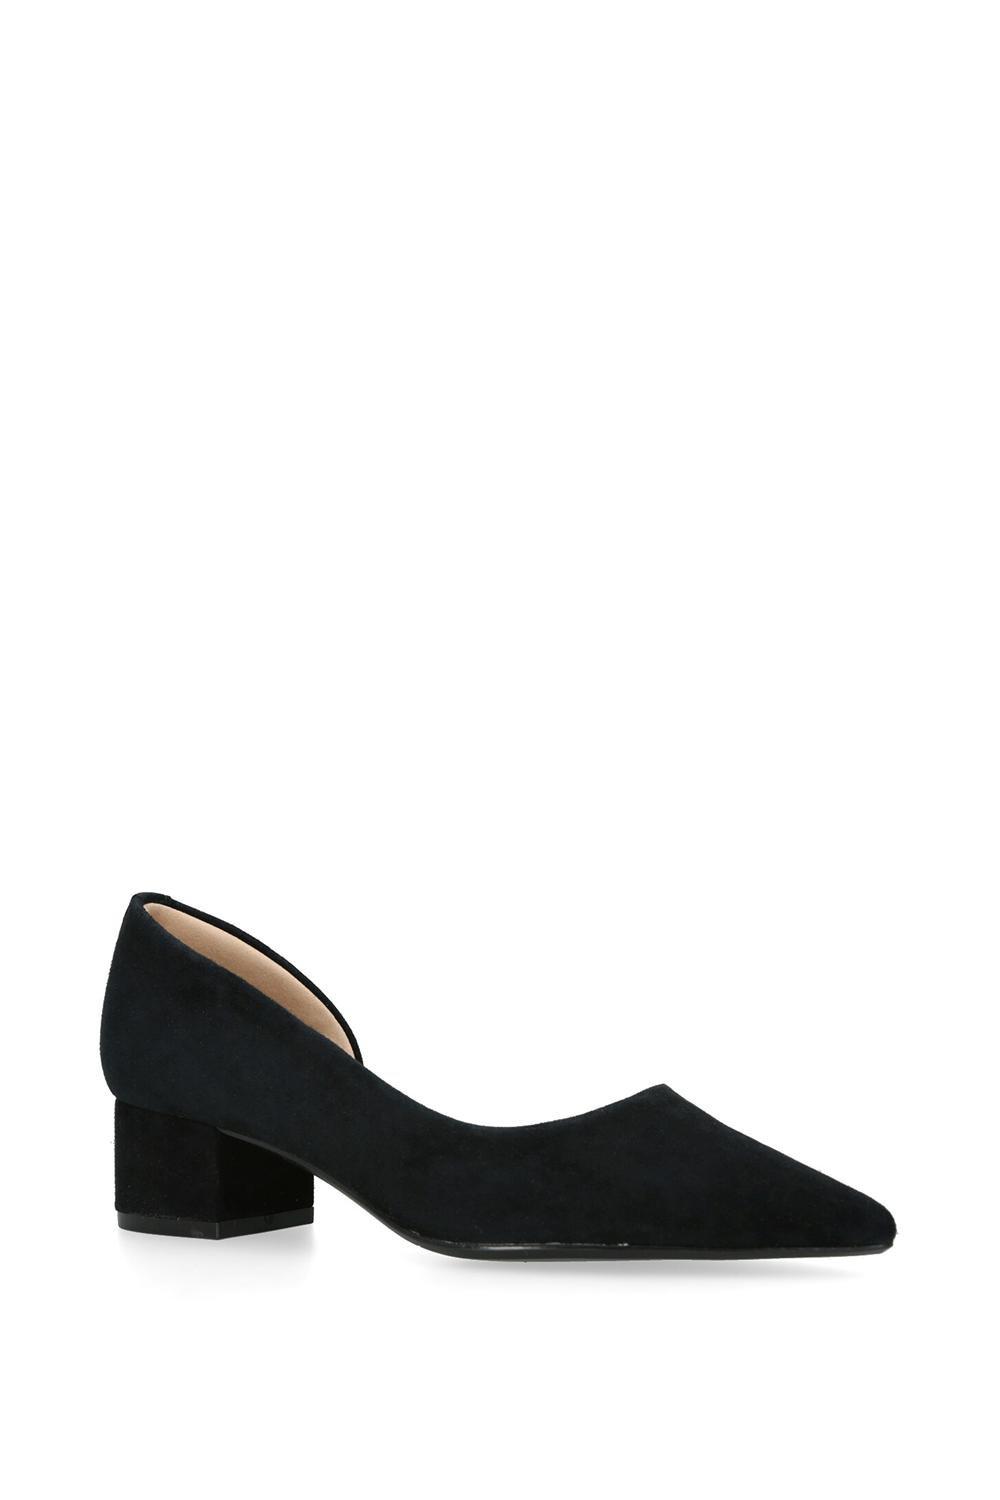 Black Suede Block Heel Court Shoes Women's | Size 3 | Asante Moshulu